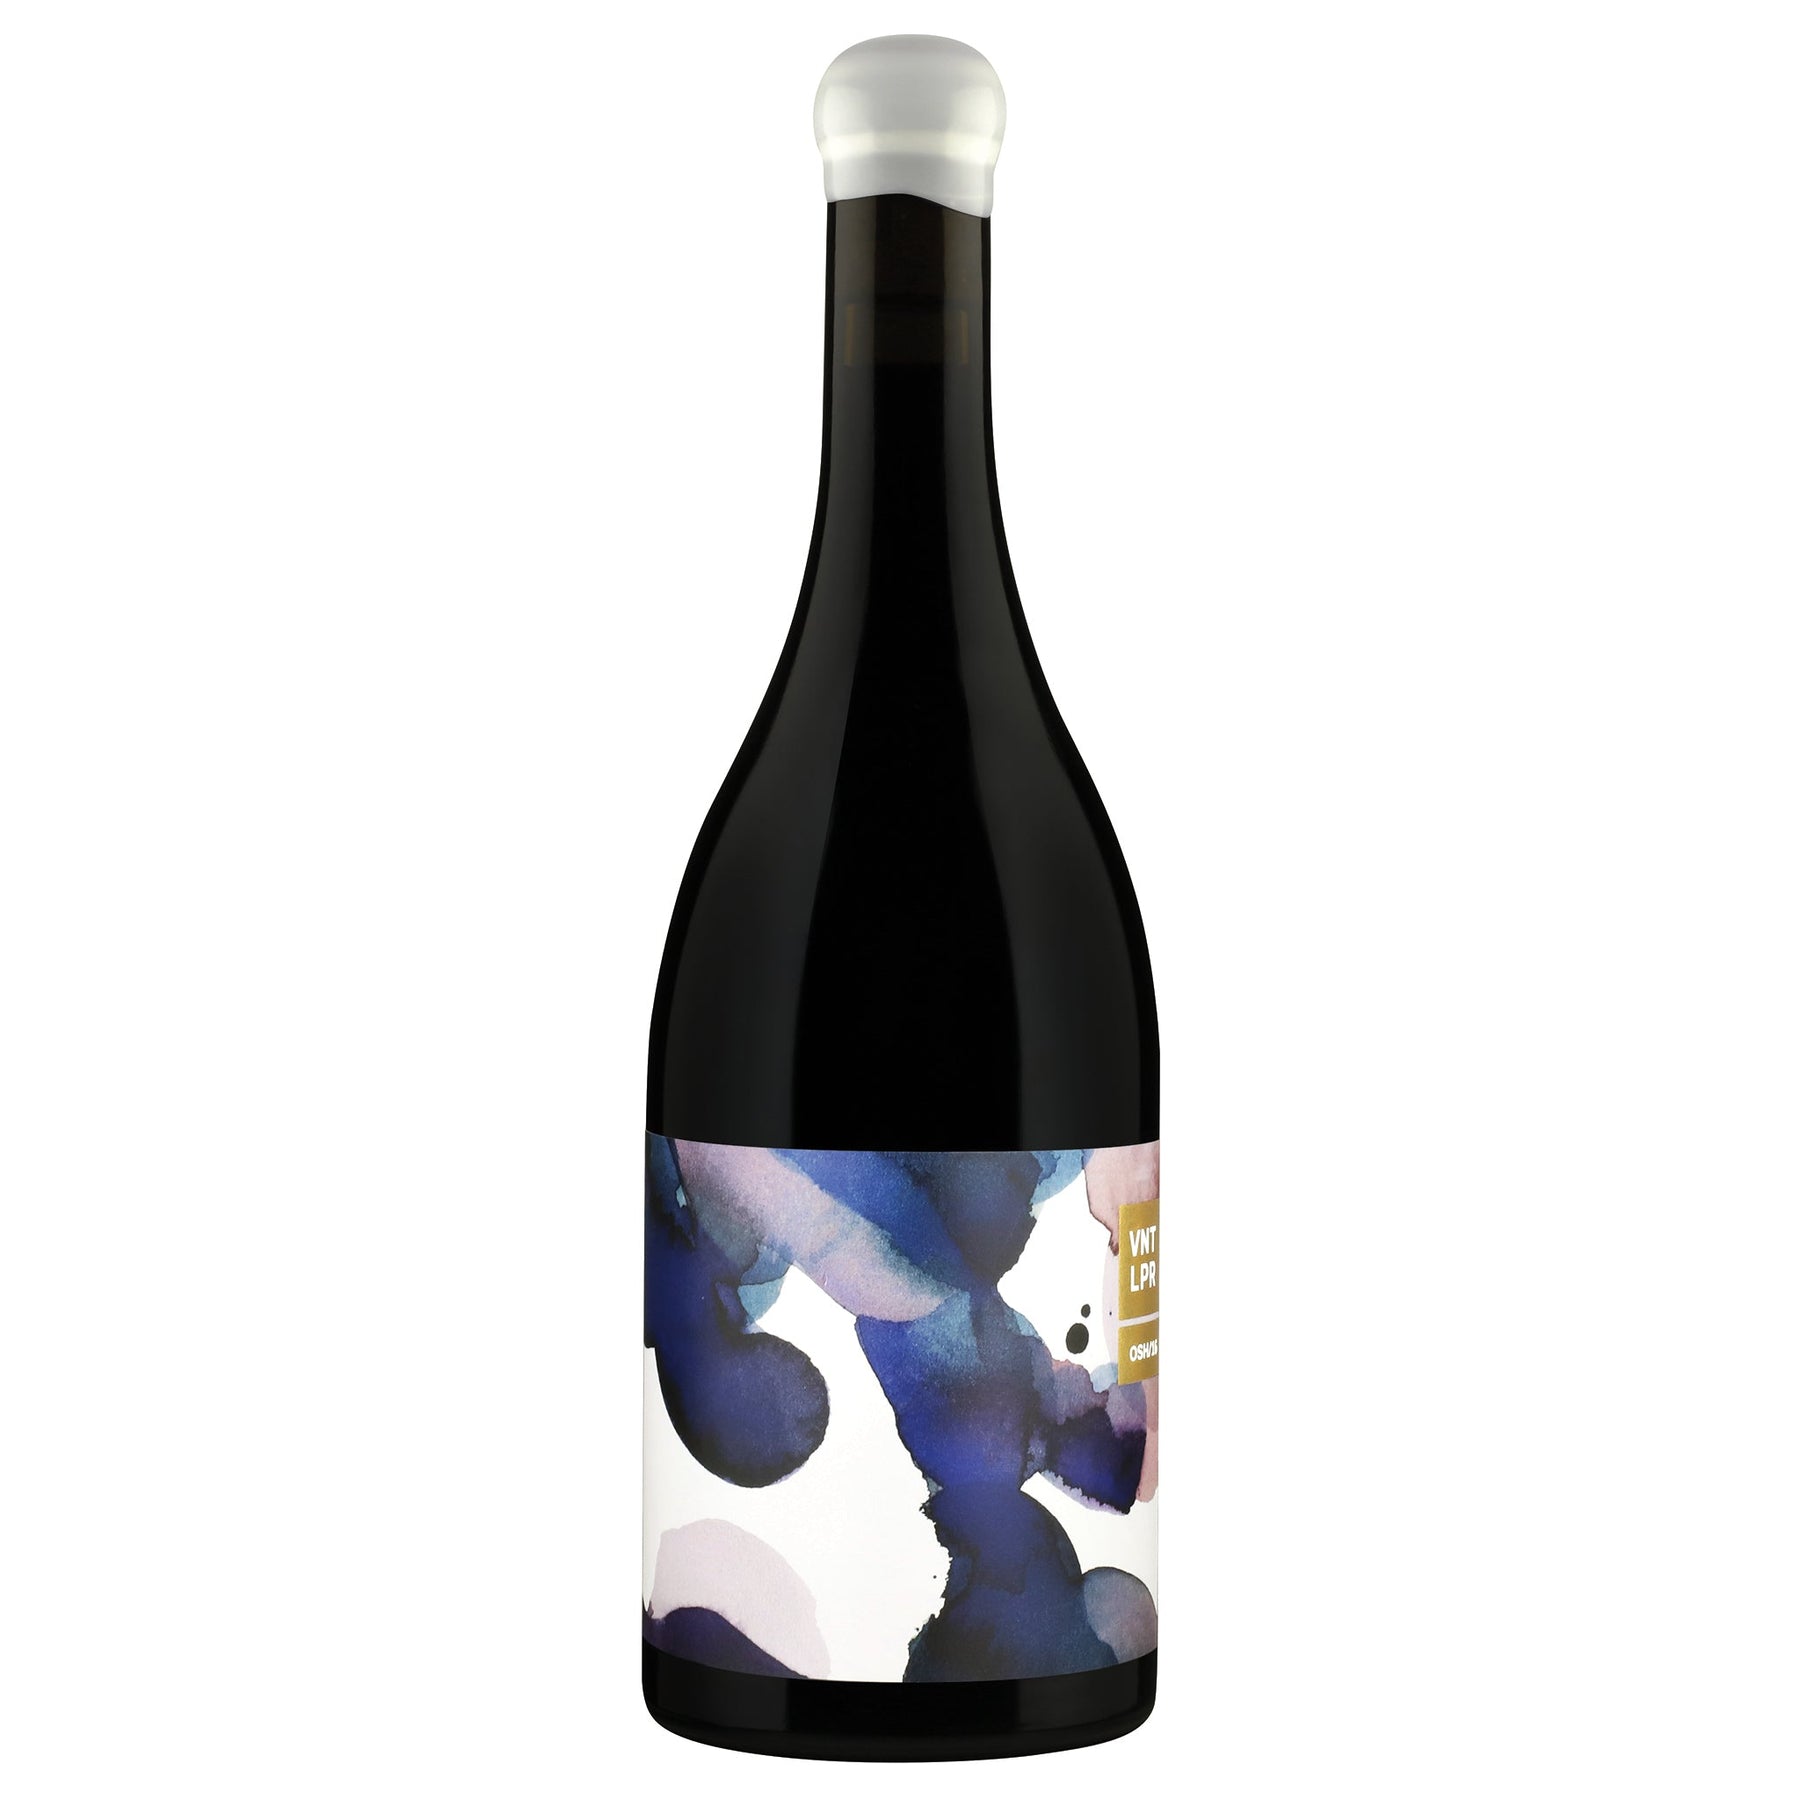 Vinteloper - ODEON Shiraz 2017 - Adelaide Hills Wine